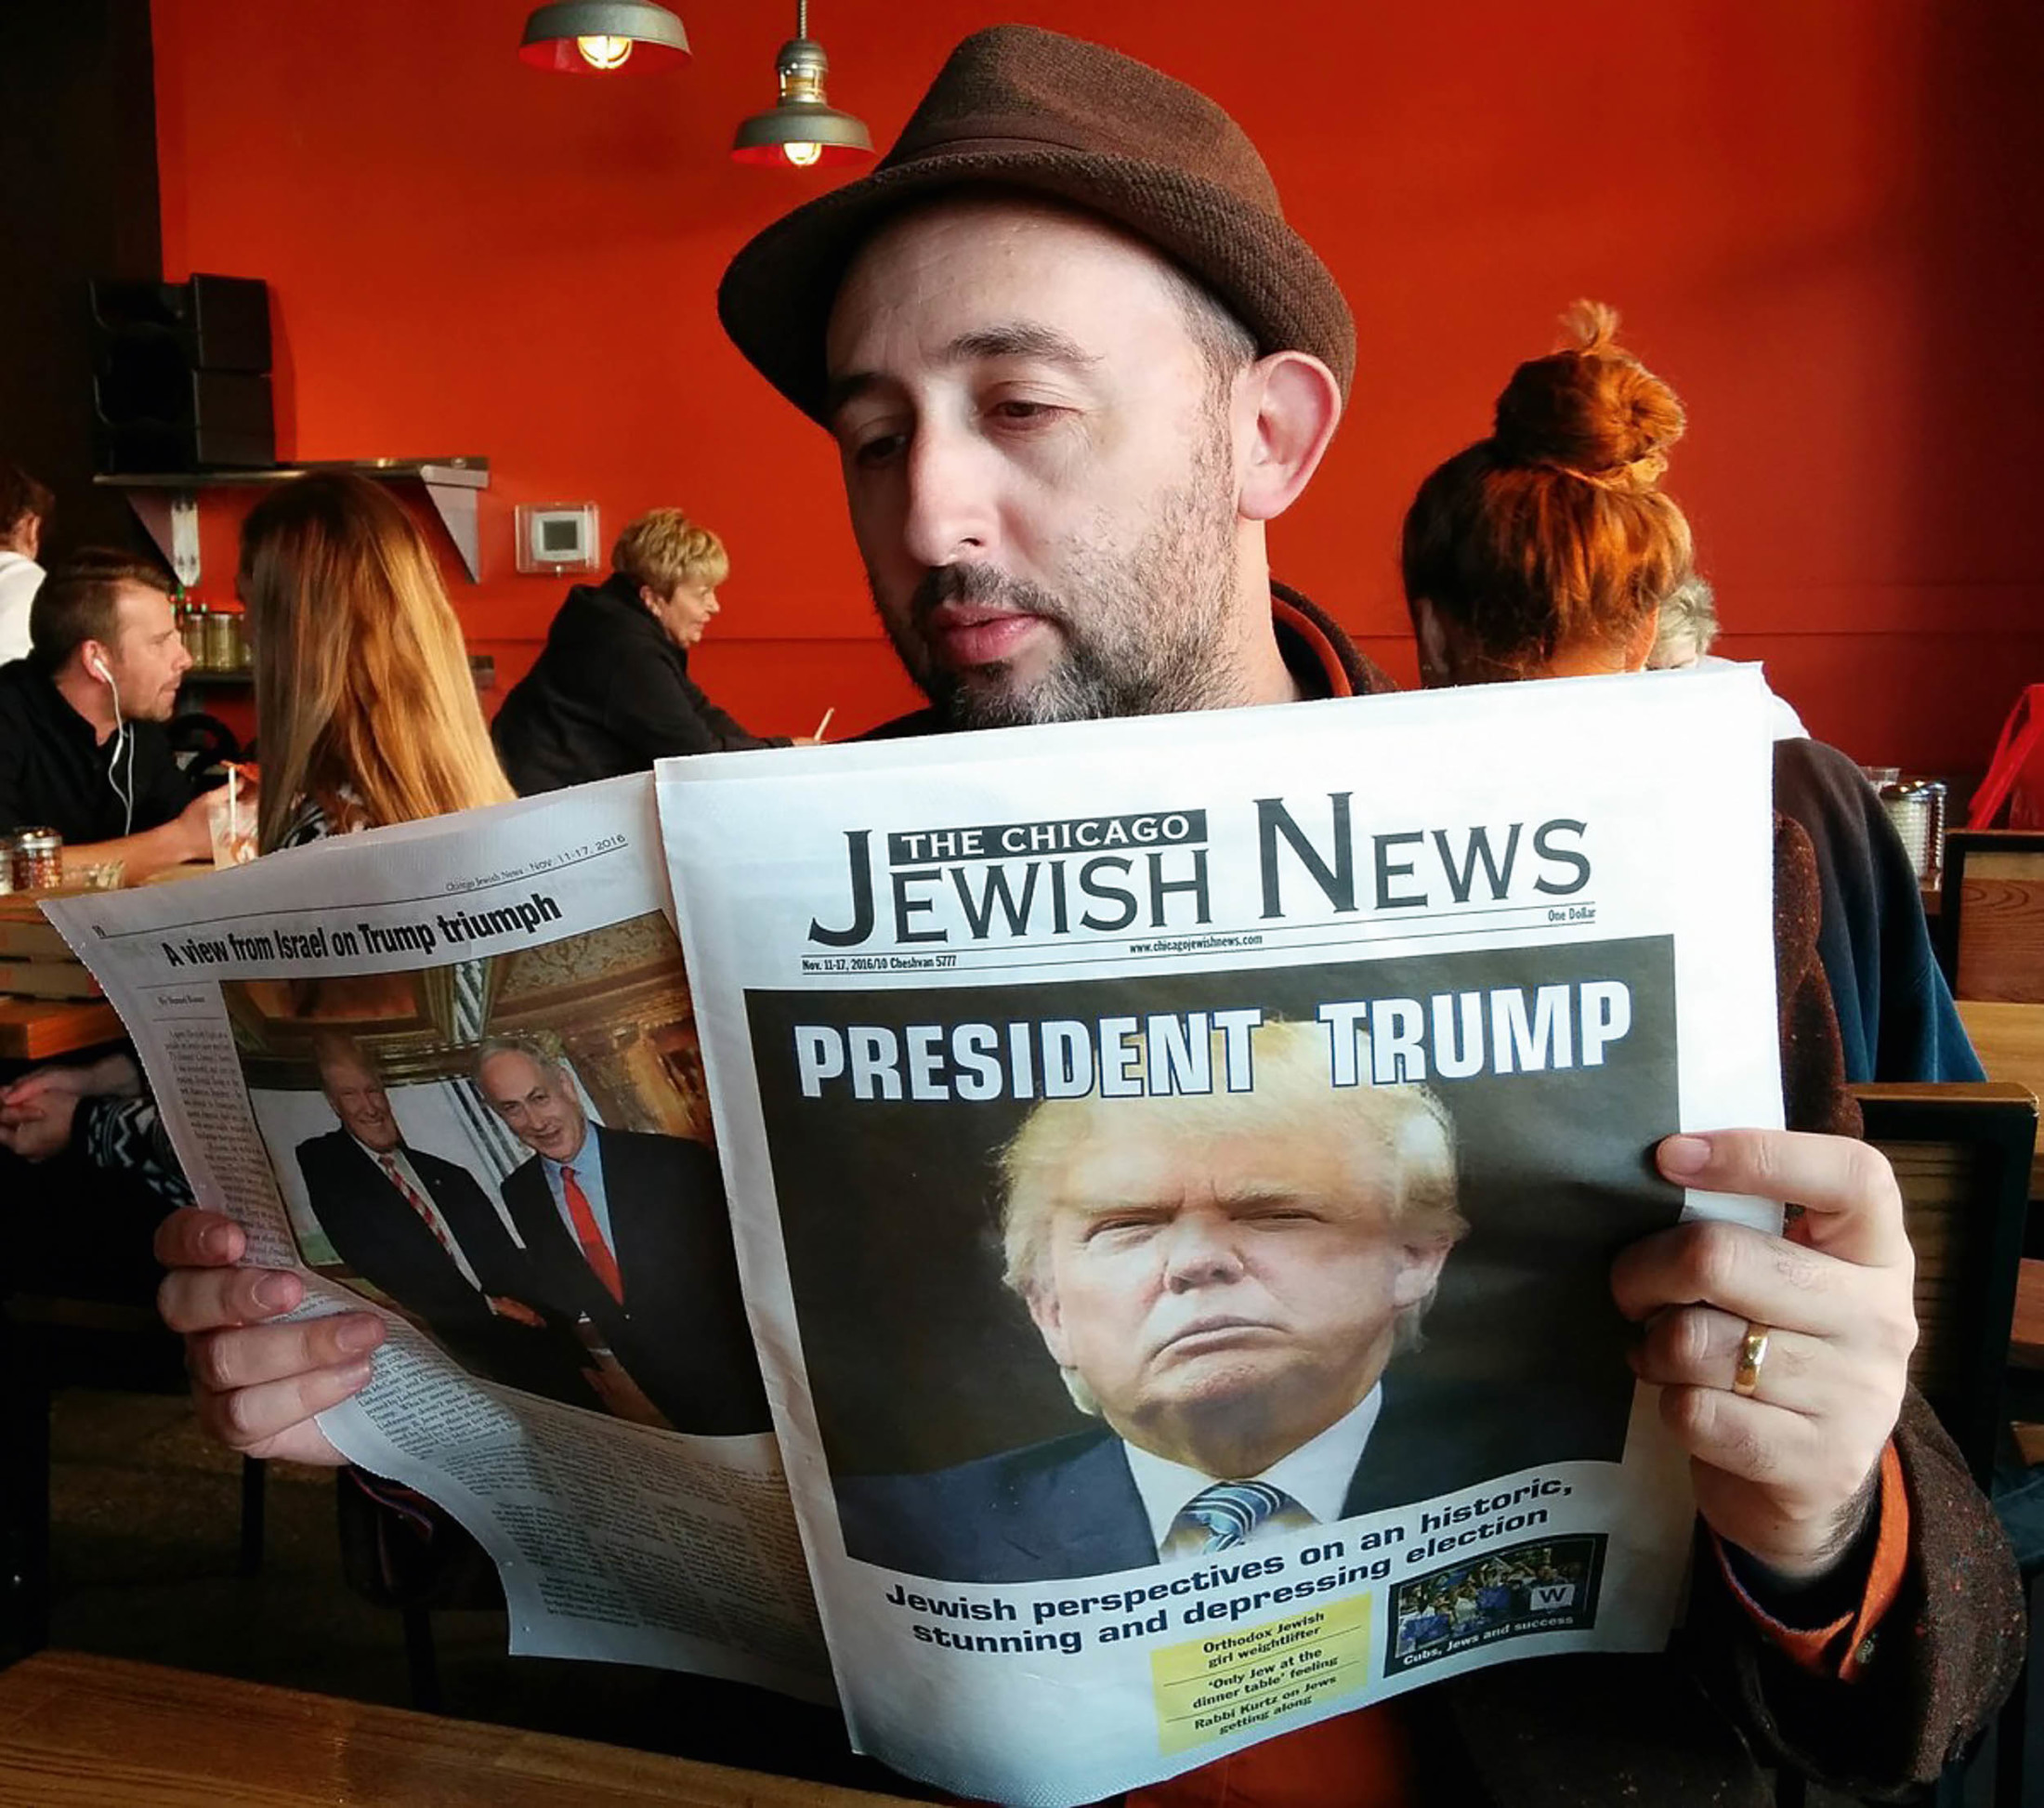 Трамп в Израиле. Трамп еврей